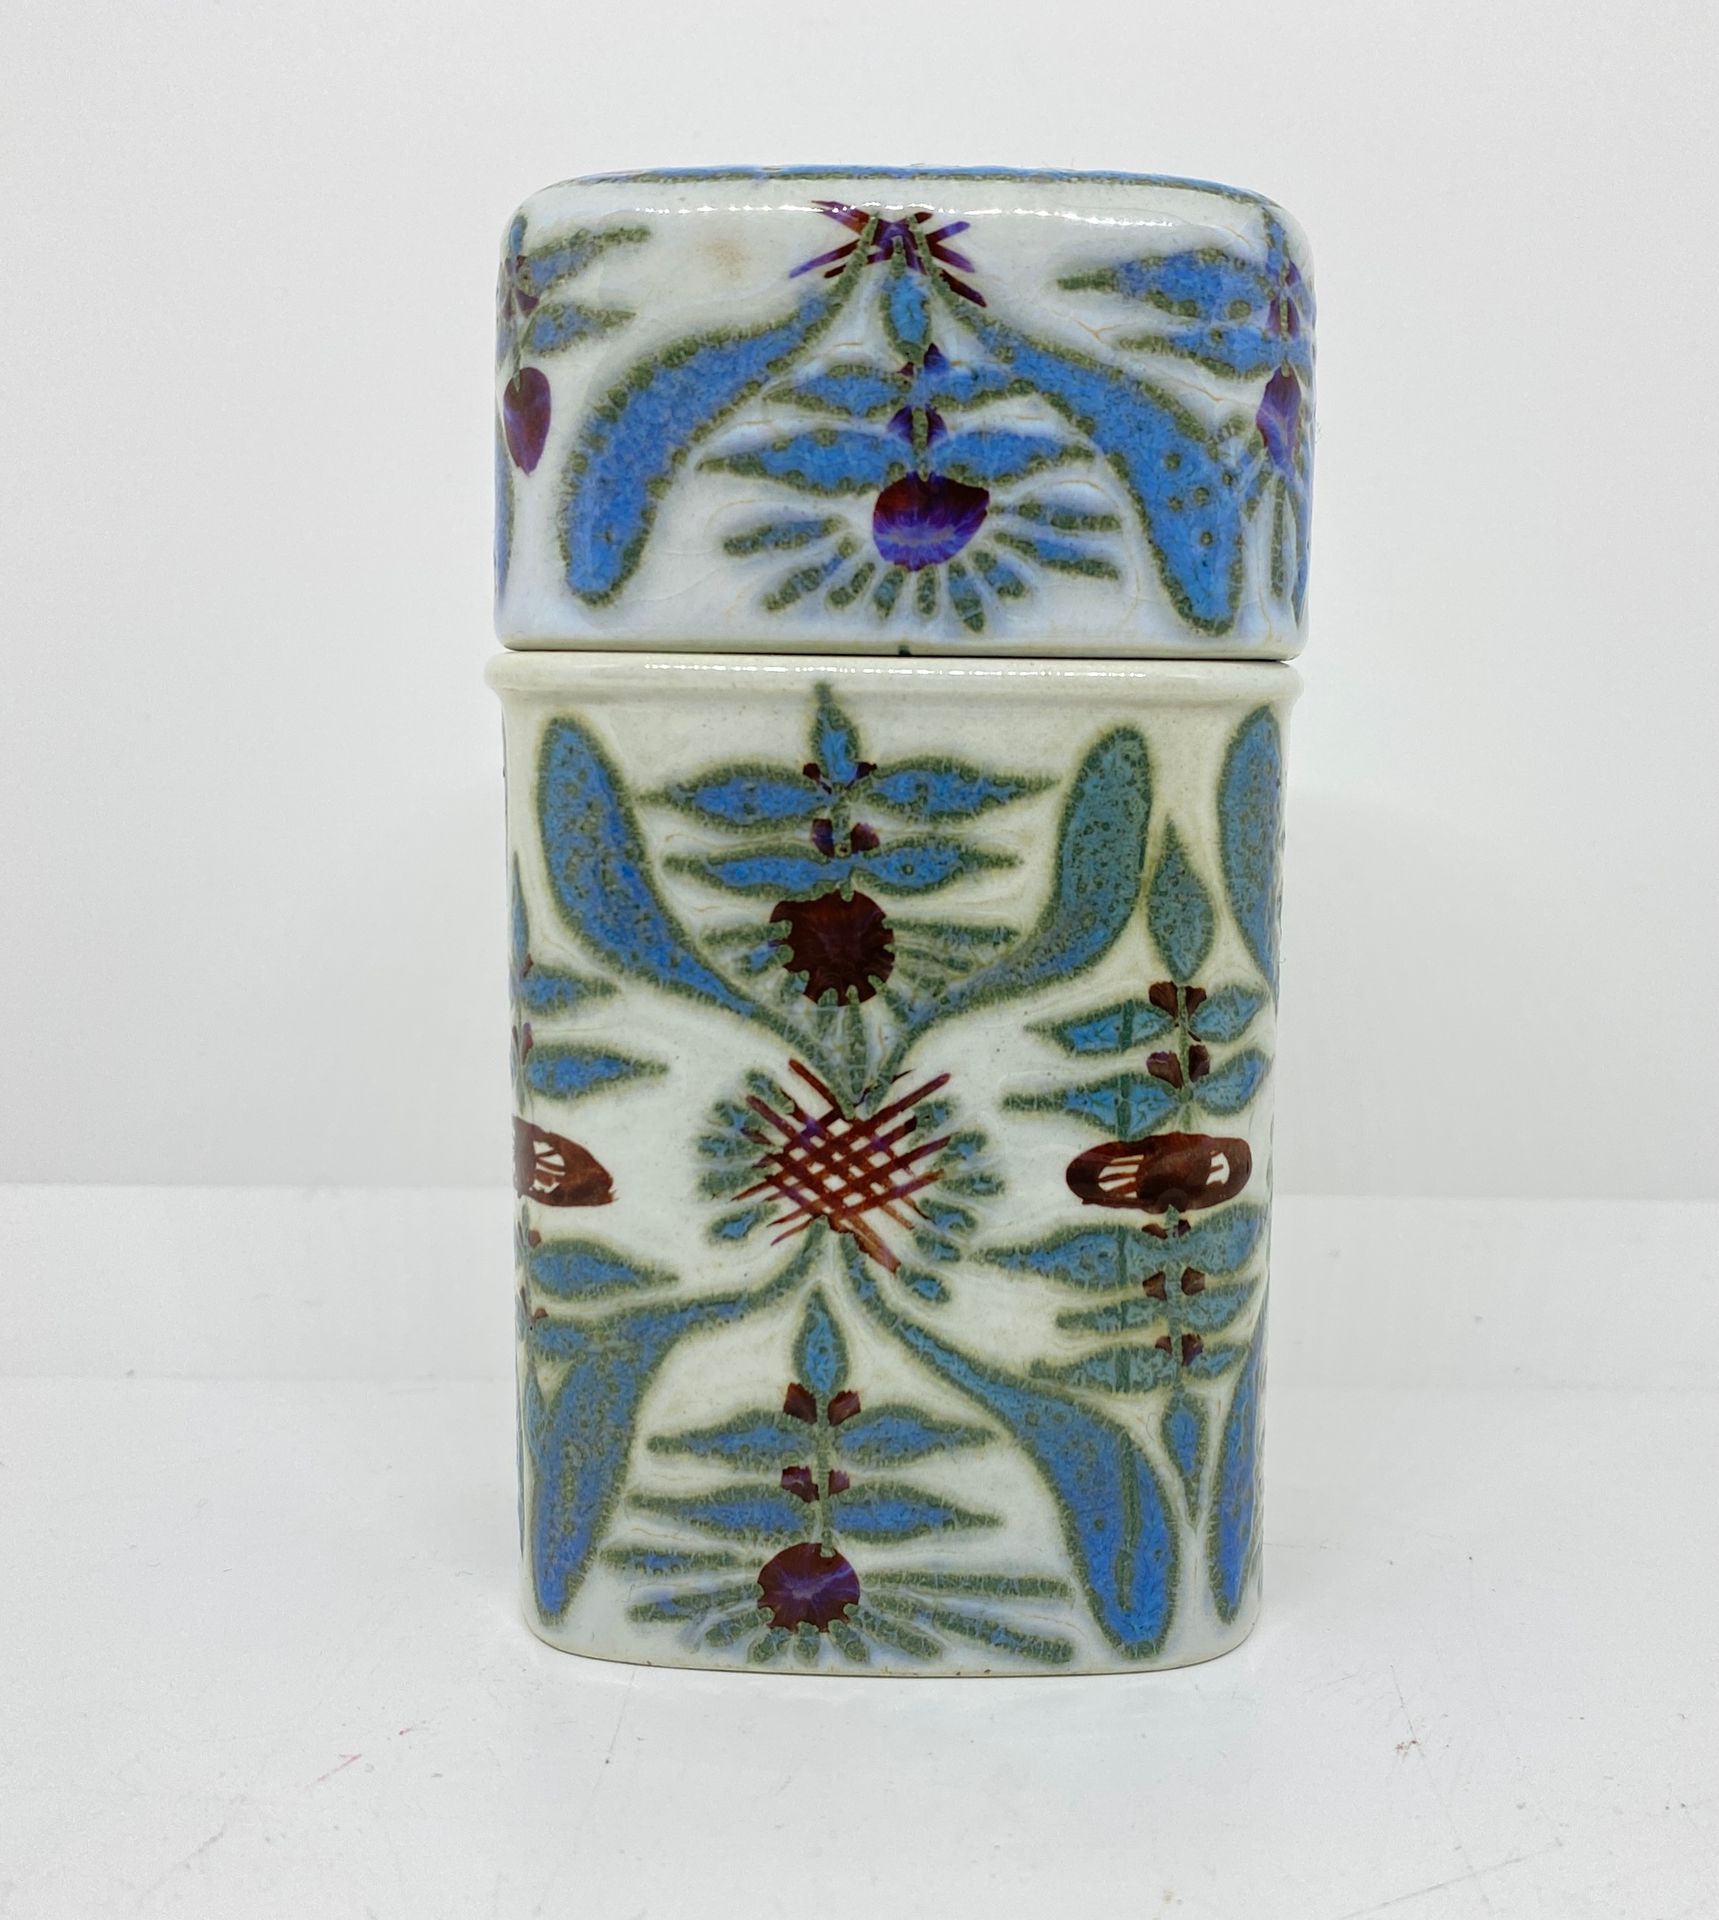 Null 丹麦

有盖的小陶盒，装饰有风格化的花朵。

背面的标记

尺寸：11x 5,5 x 4,5cm